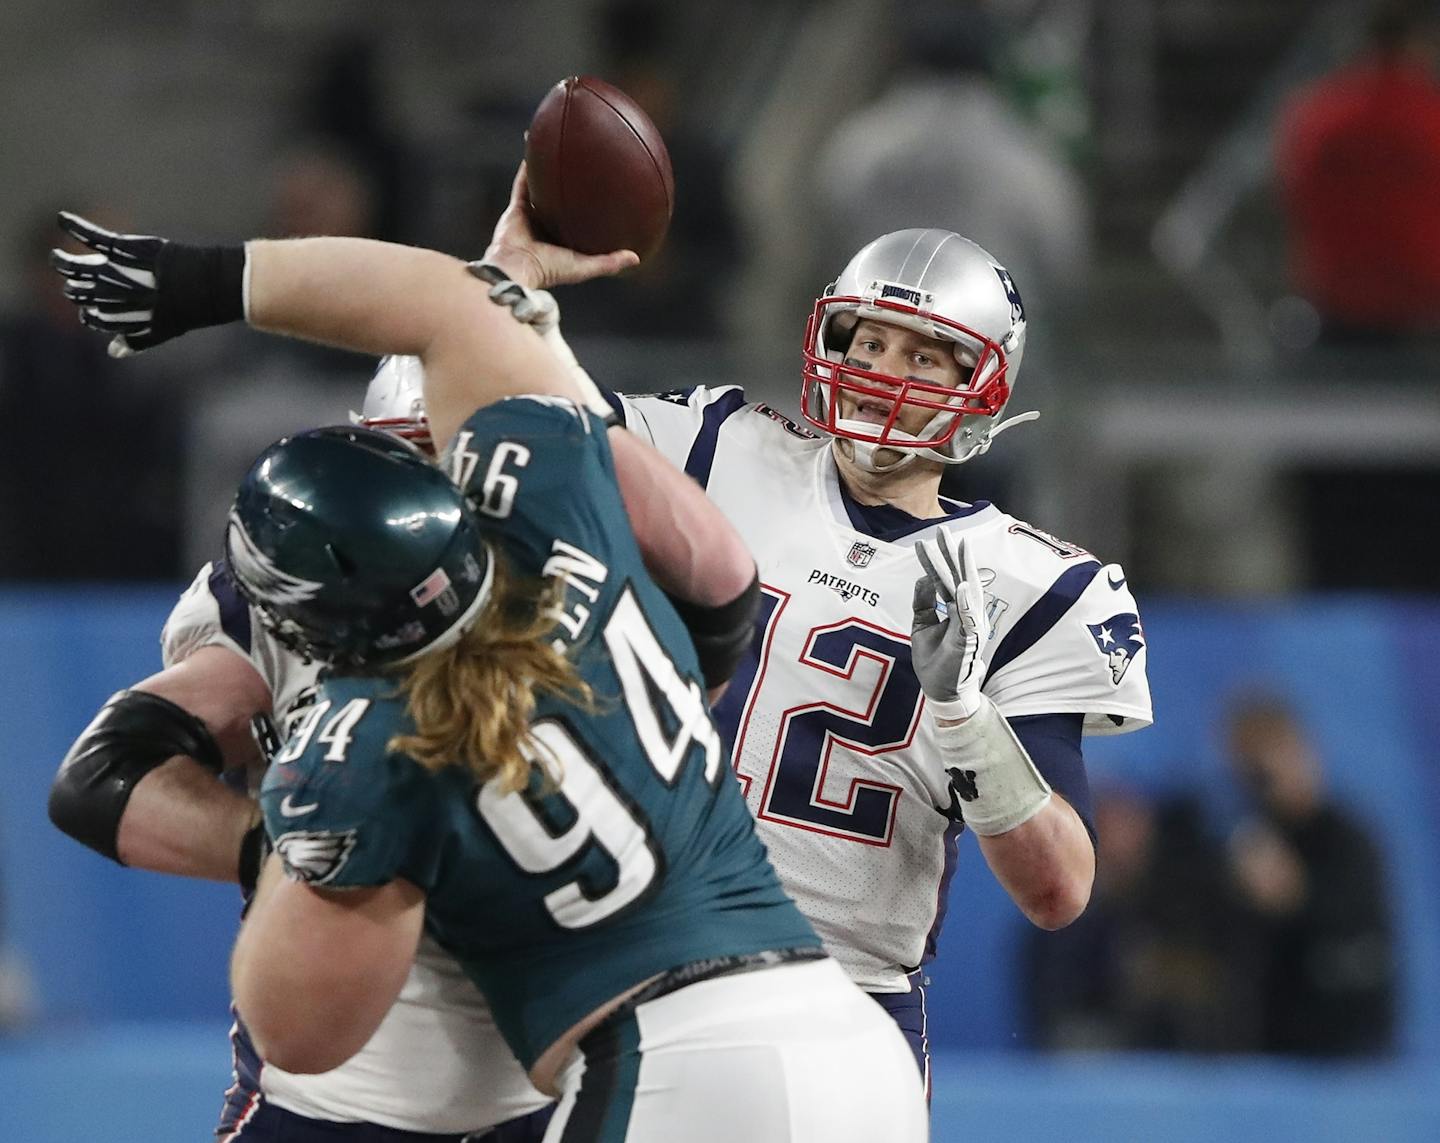 Deep Eagles defense looks to run down Patriots' Tom Brady, Super Bowl, Sports